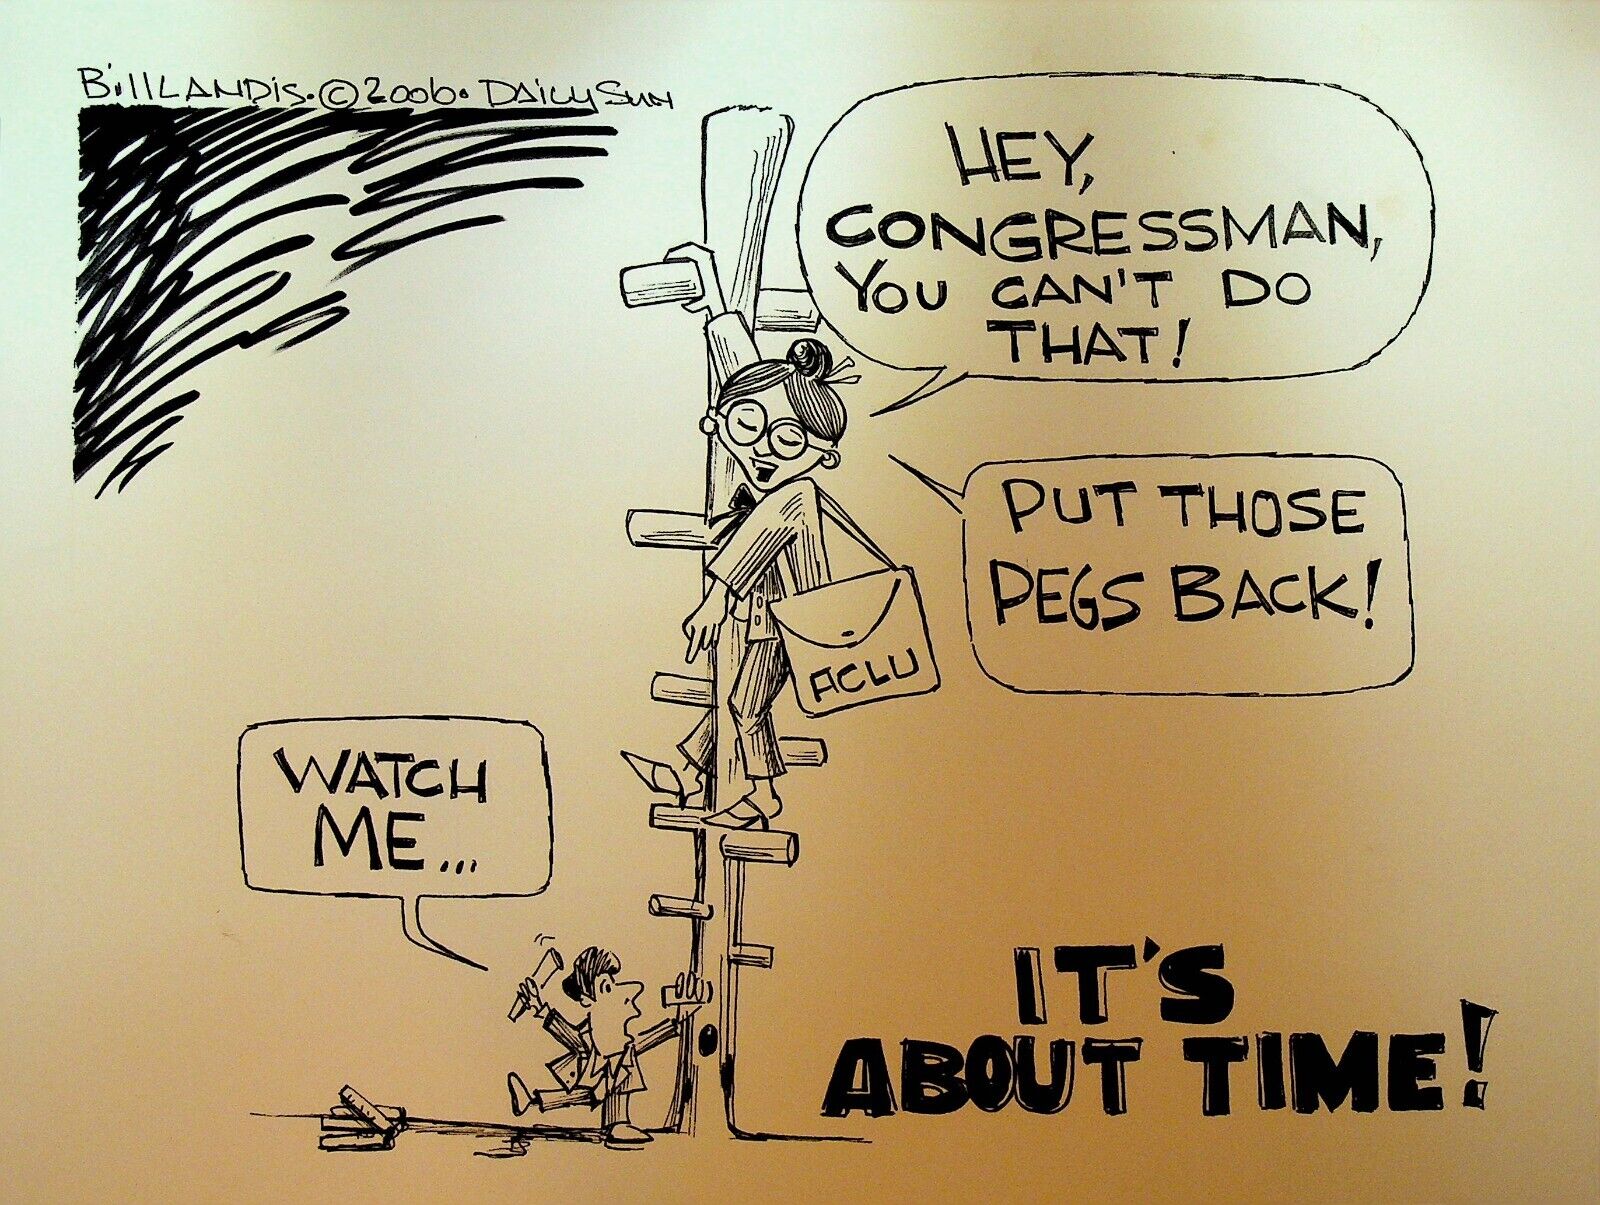 Bill Landis Original Cartoon Art The Villages Daily Sun 2006 Against ACLU